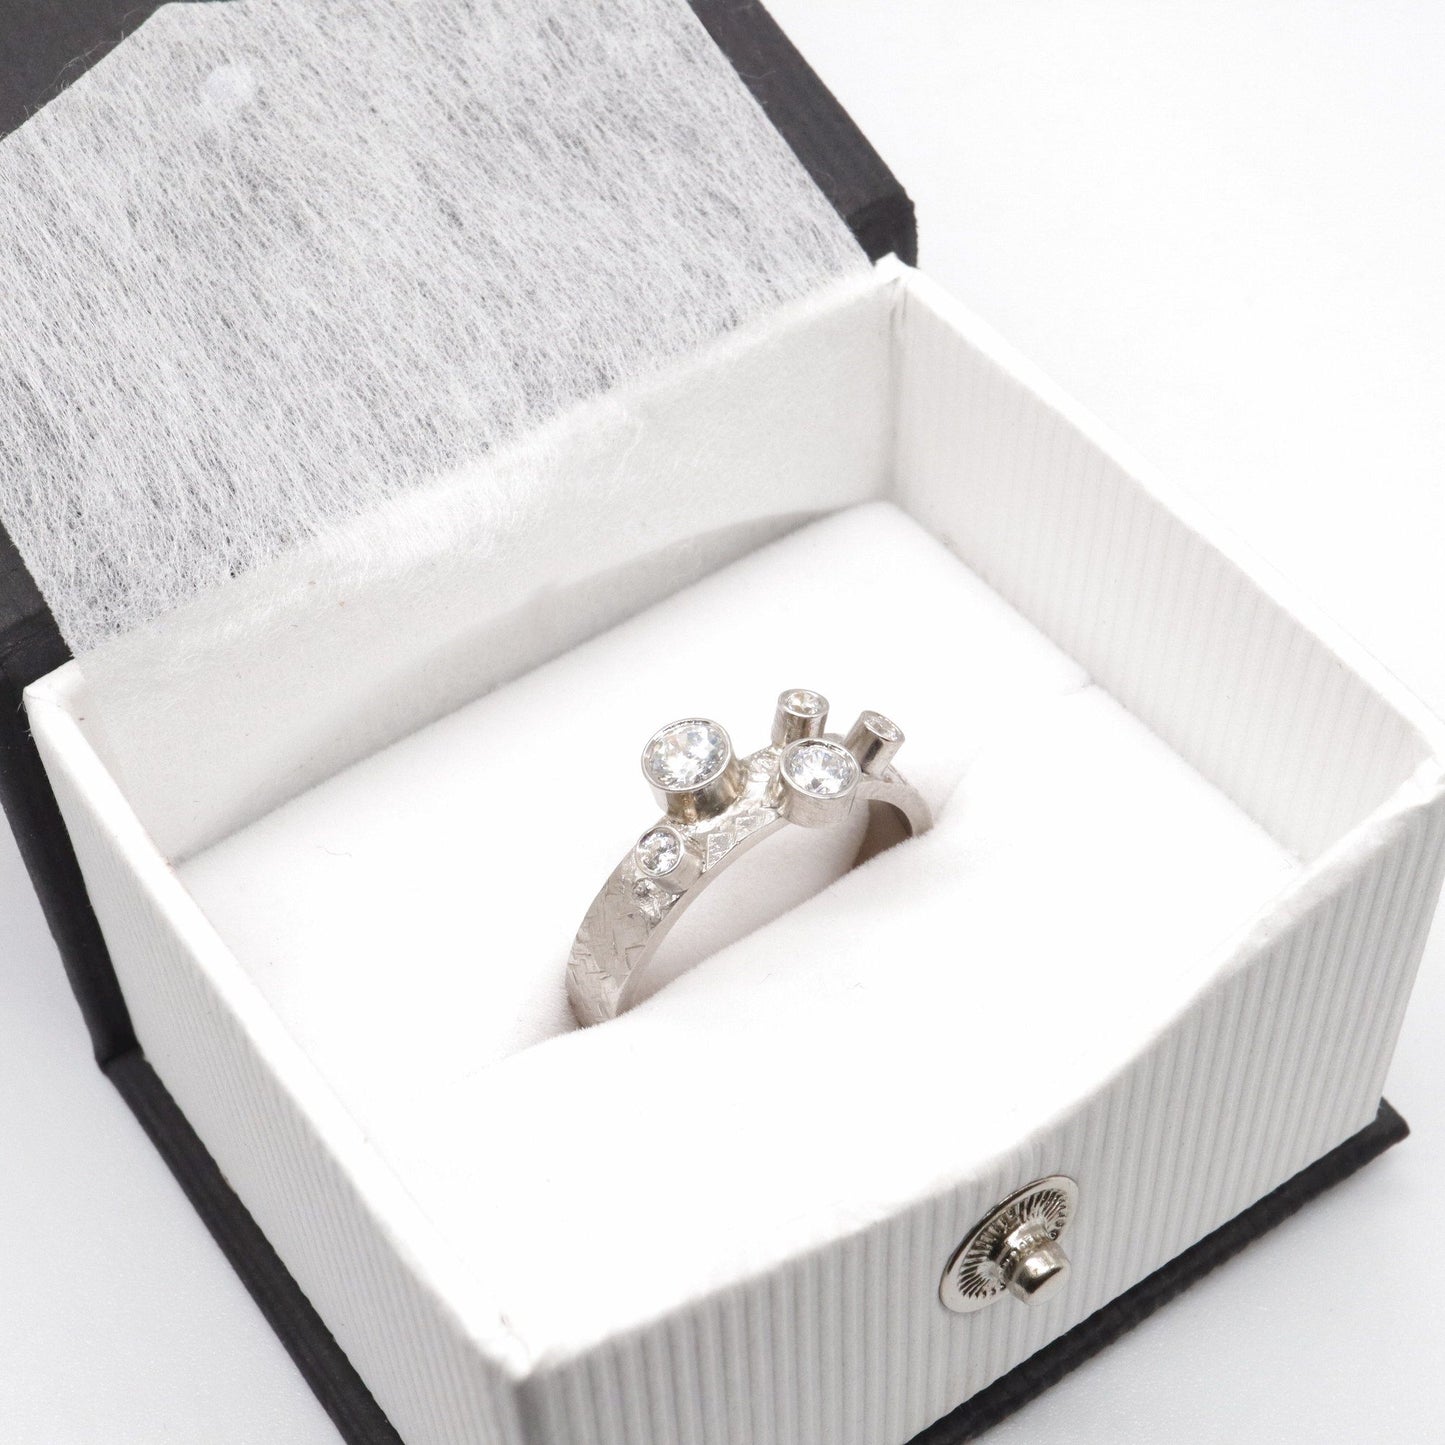 Cocktail ring, white gold diamond original Kendal design